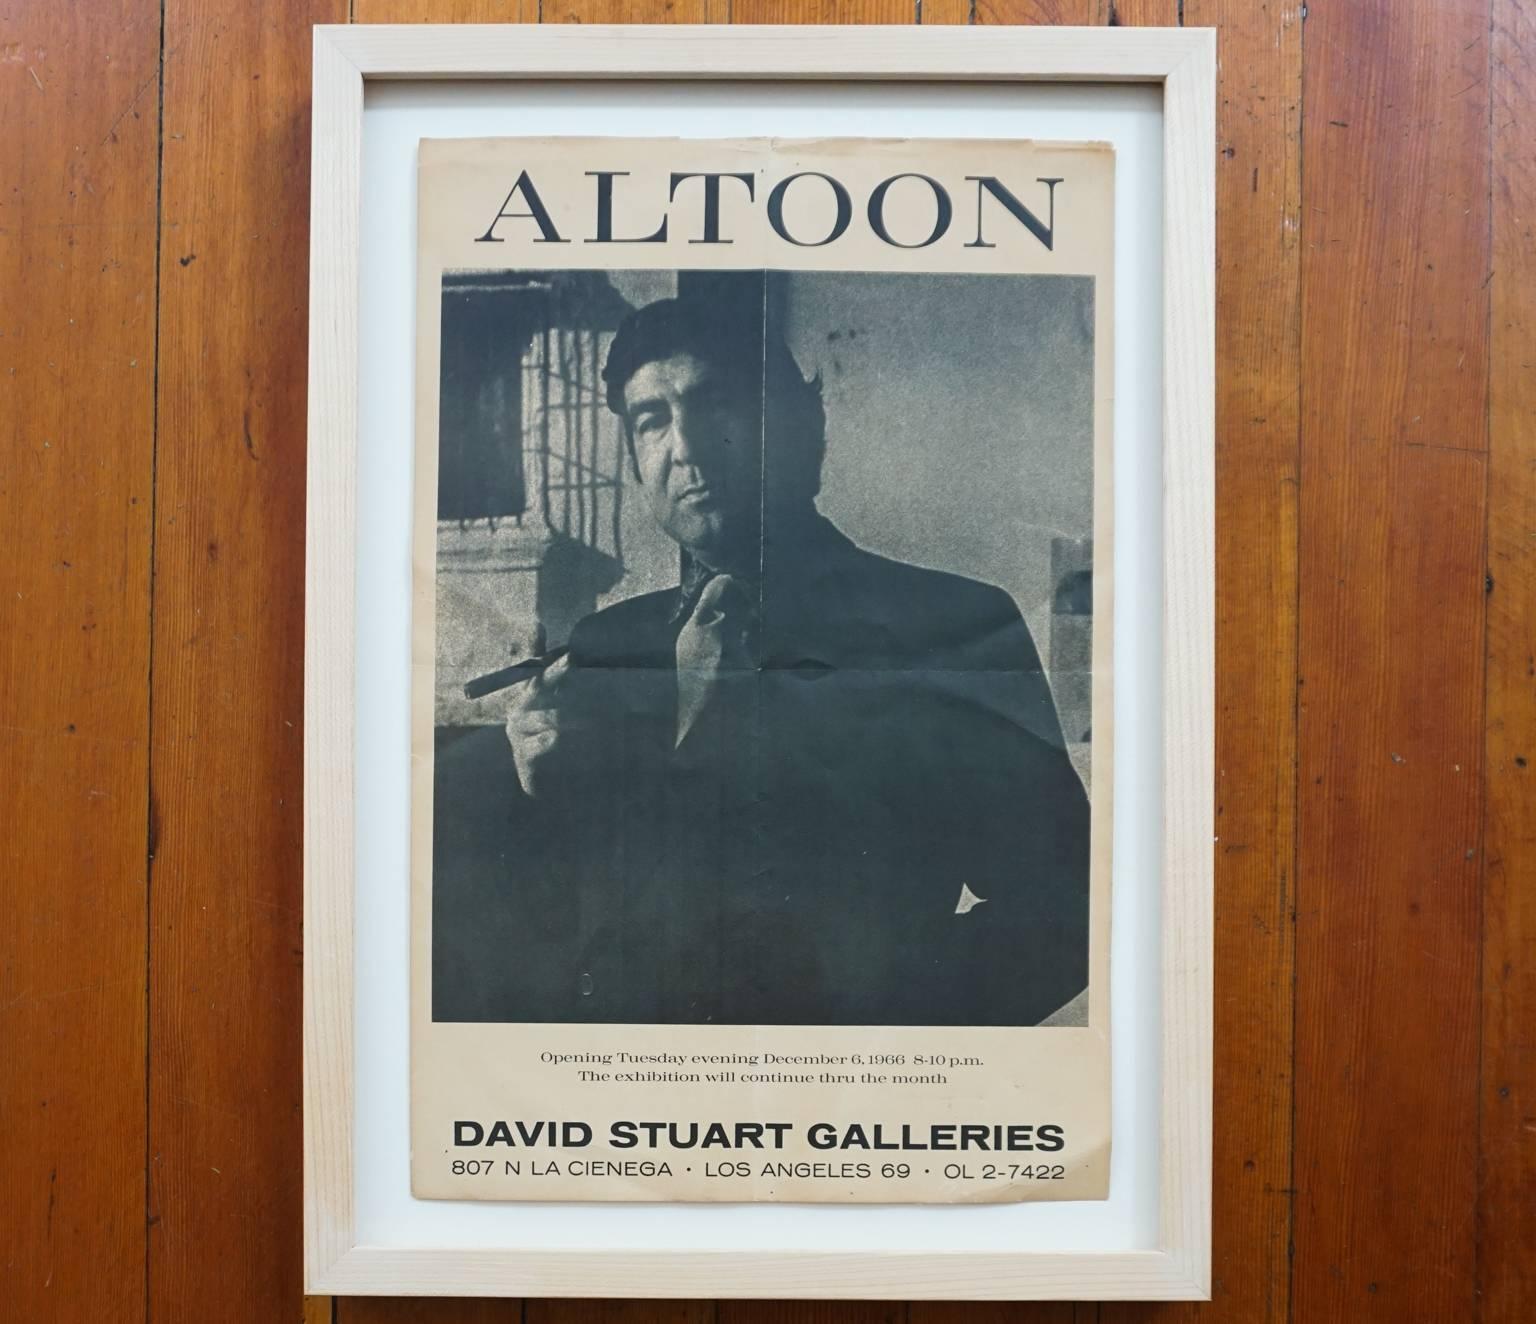 Framed John Altoon exhibition poster from 1965.

Irving Blum, partner in the Ferus Gallery, recalls: 